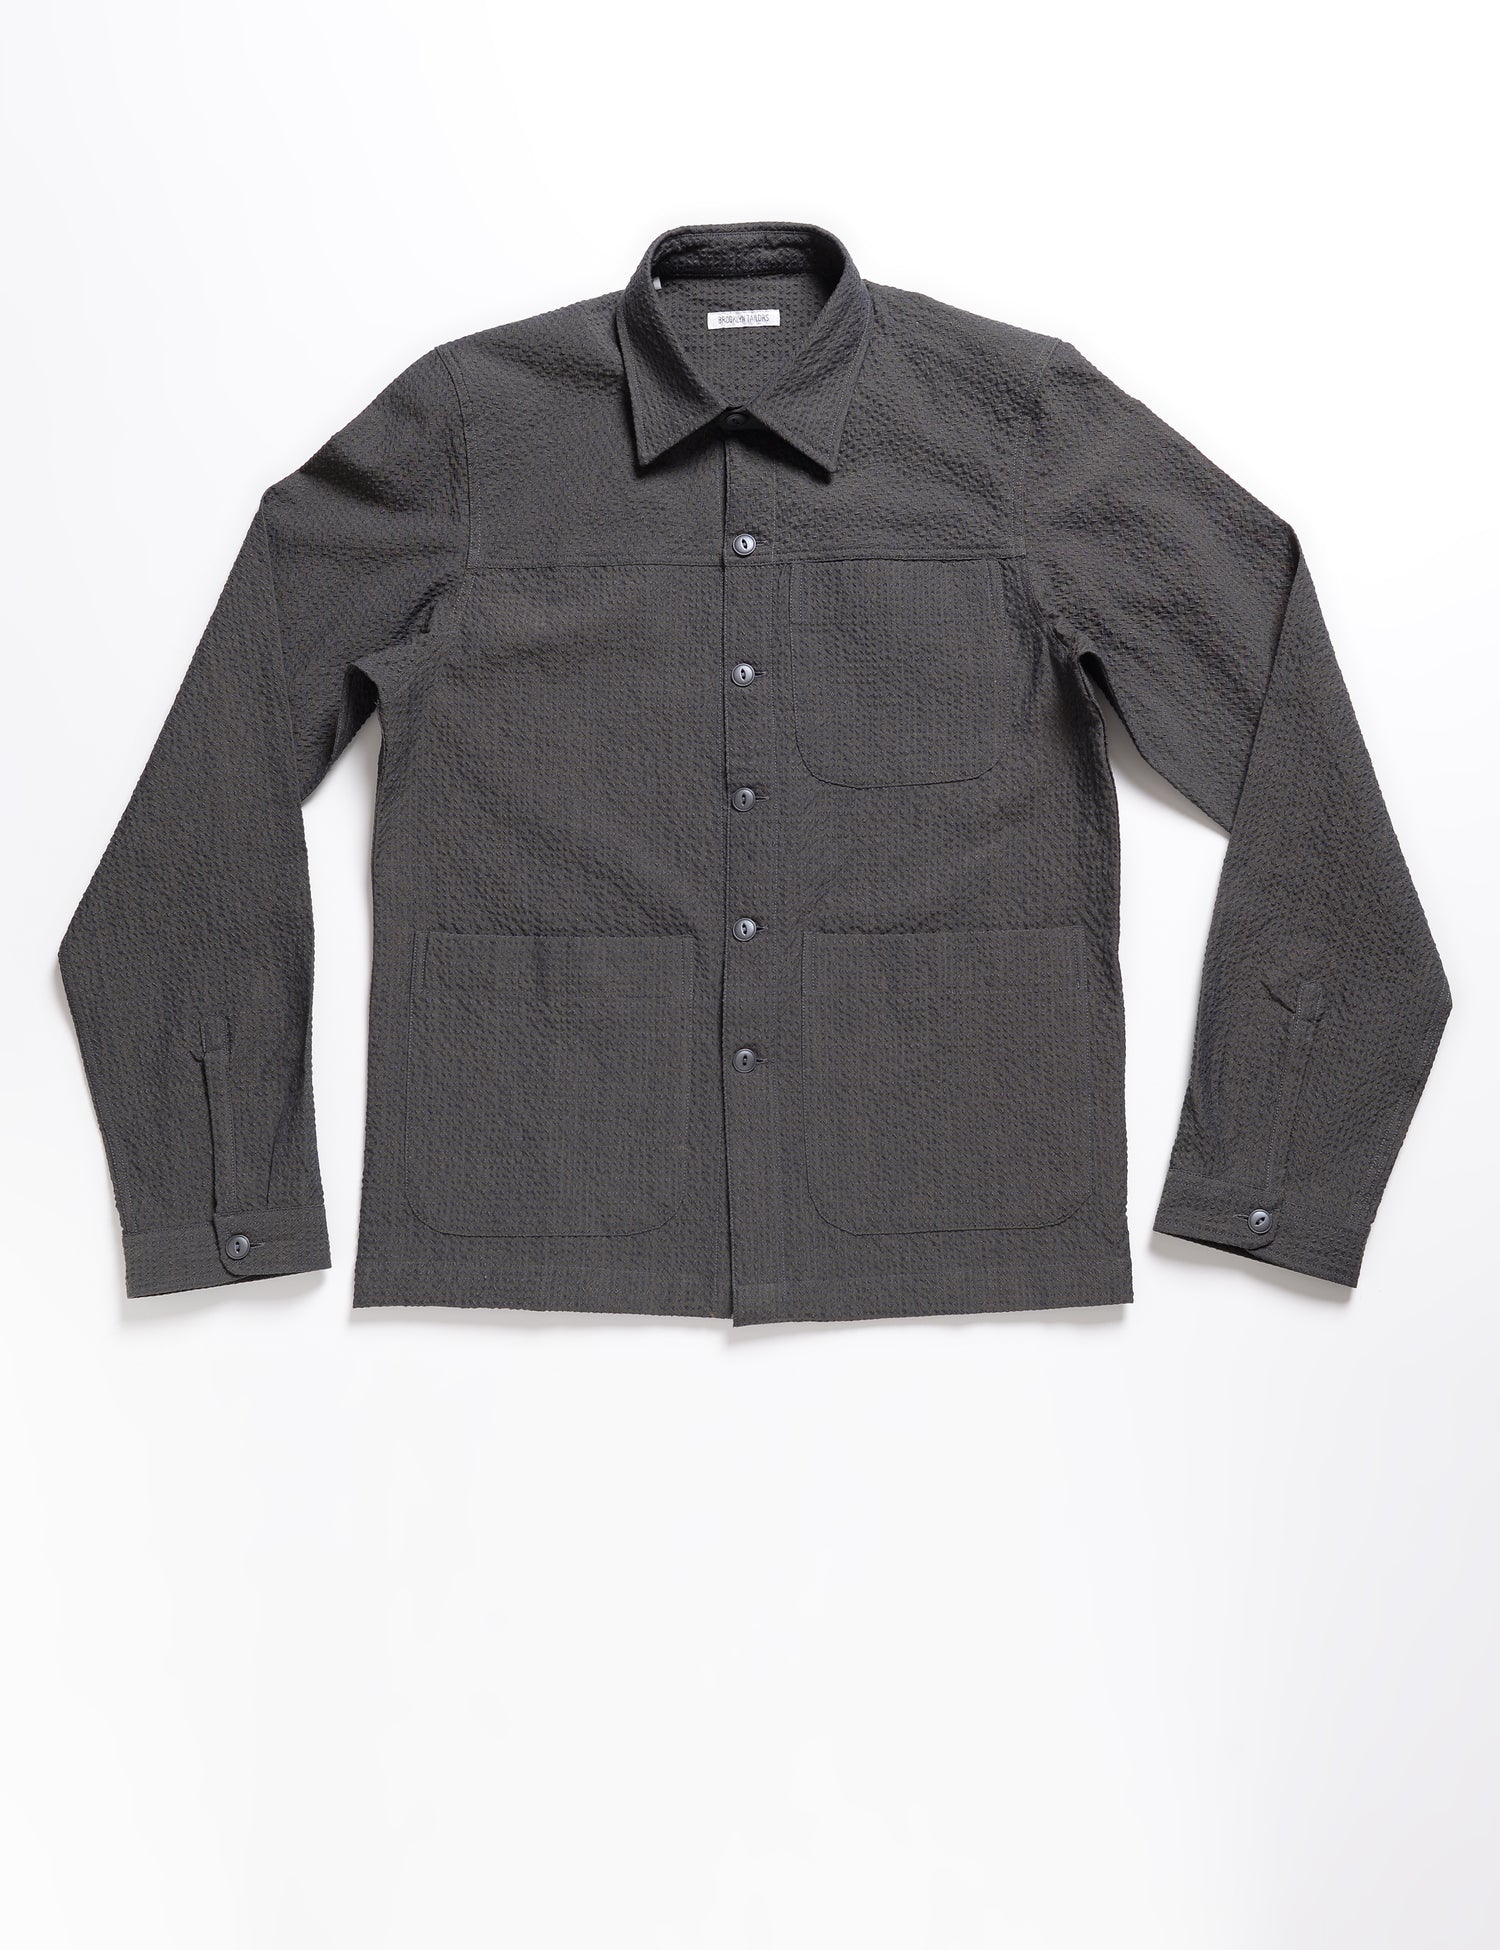 Brooklyn Tailors BKT15 Shirt Jacket in Crinkled Wool & Cotton - Storm full length flat shot